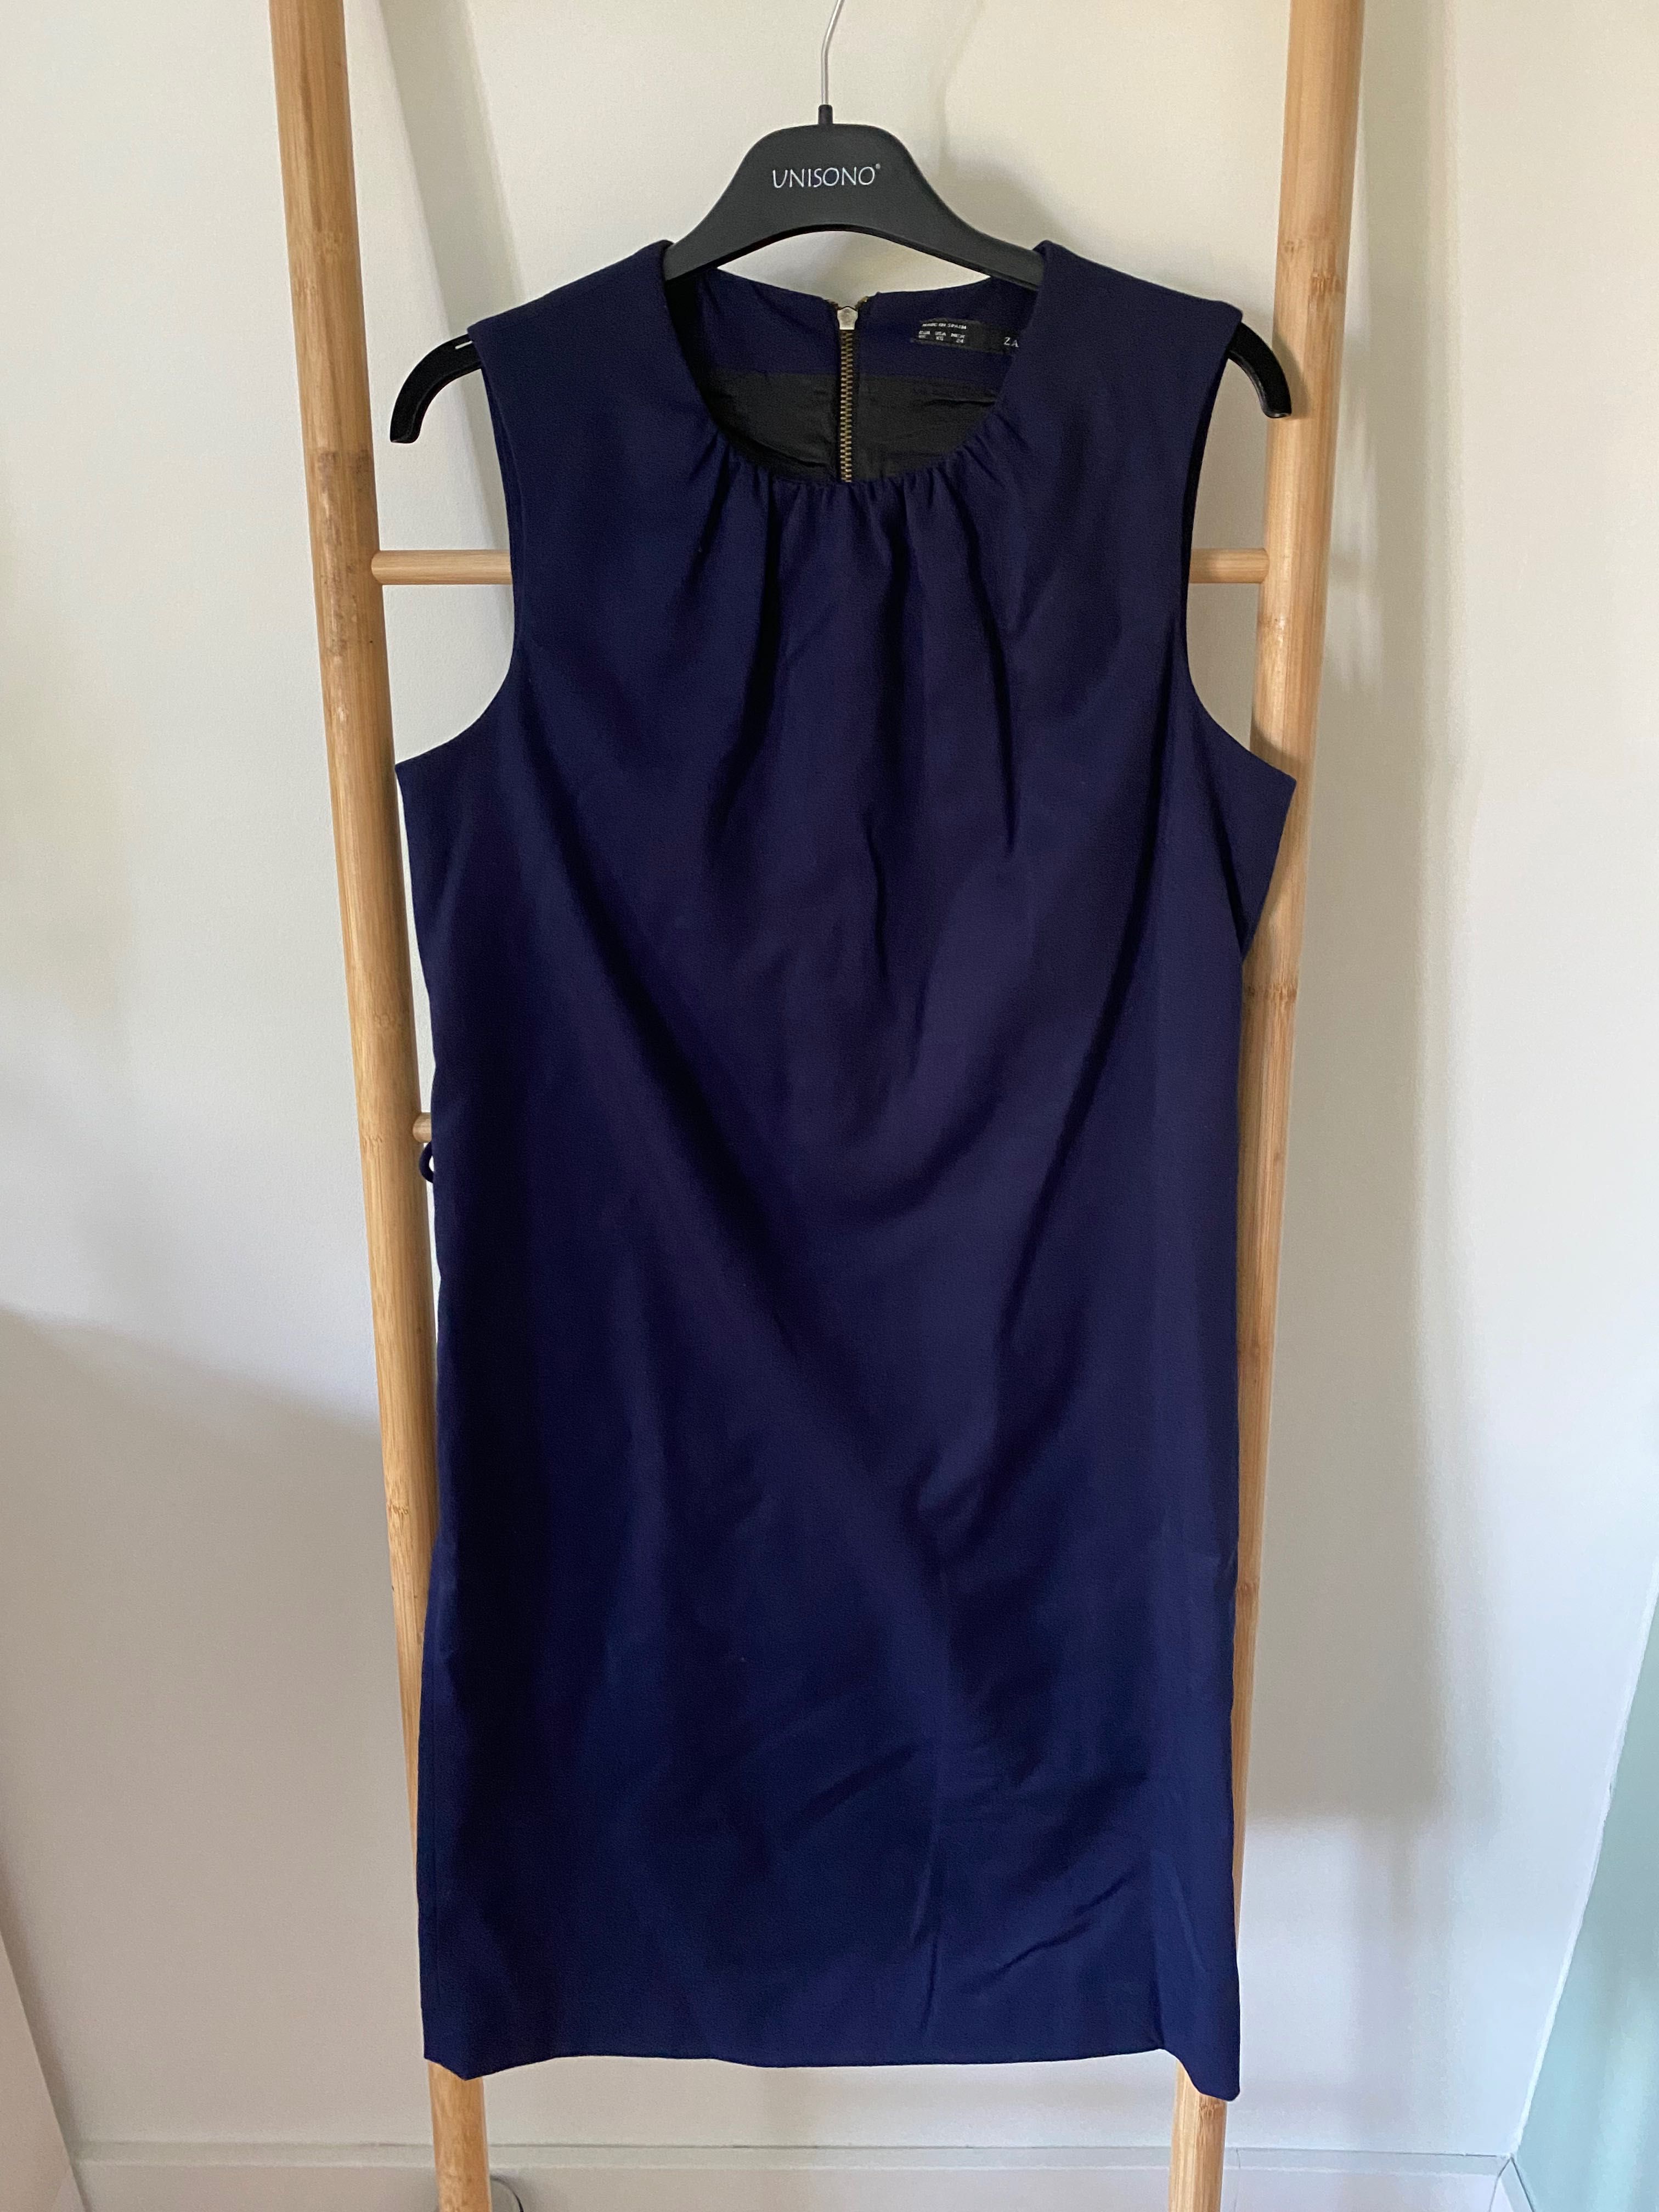 Granatowa sukienka Zara XS